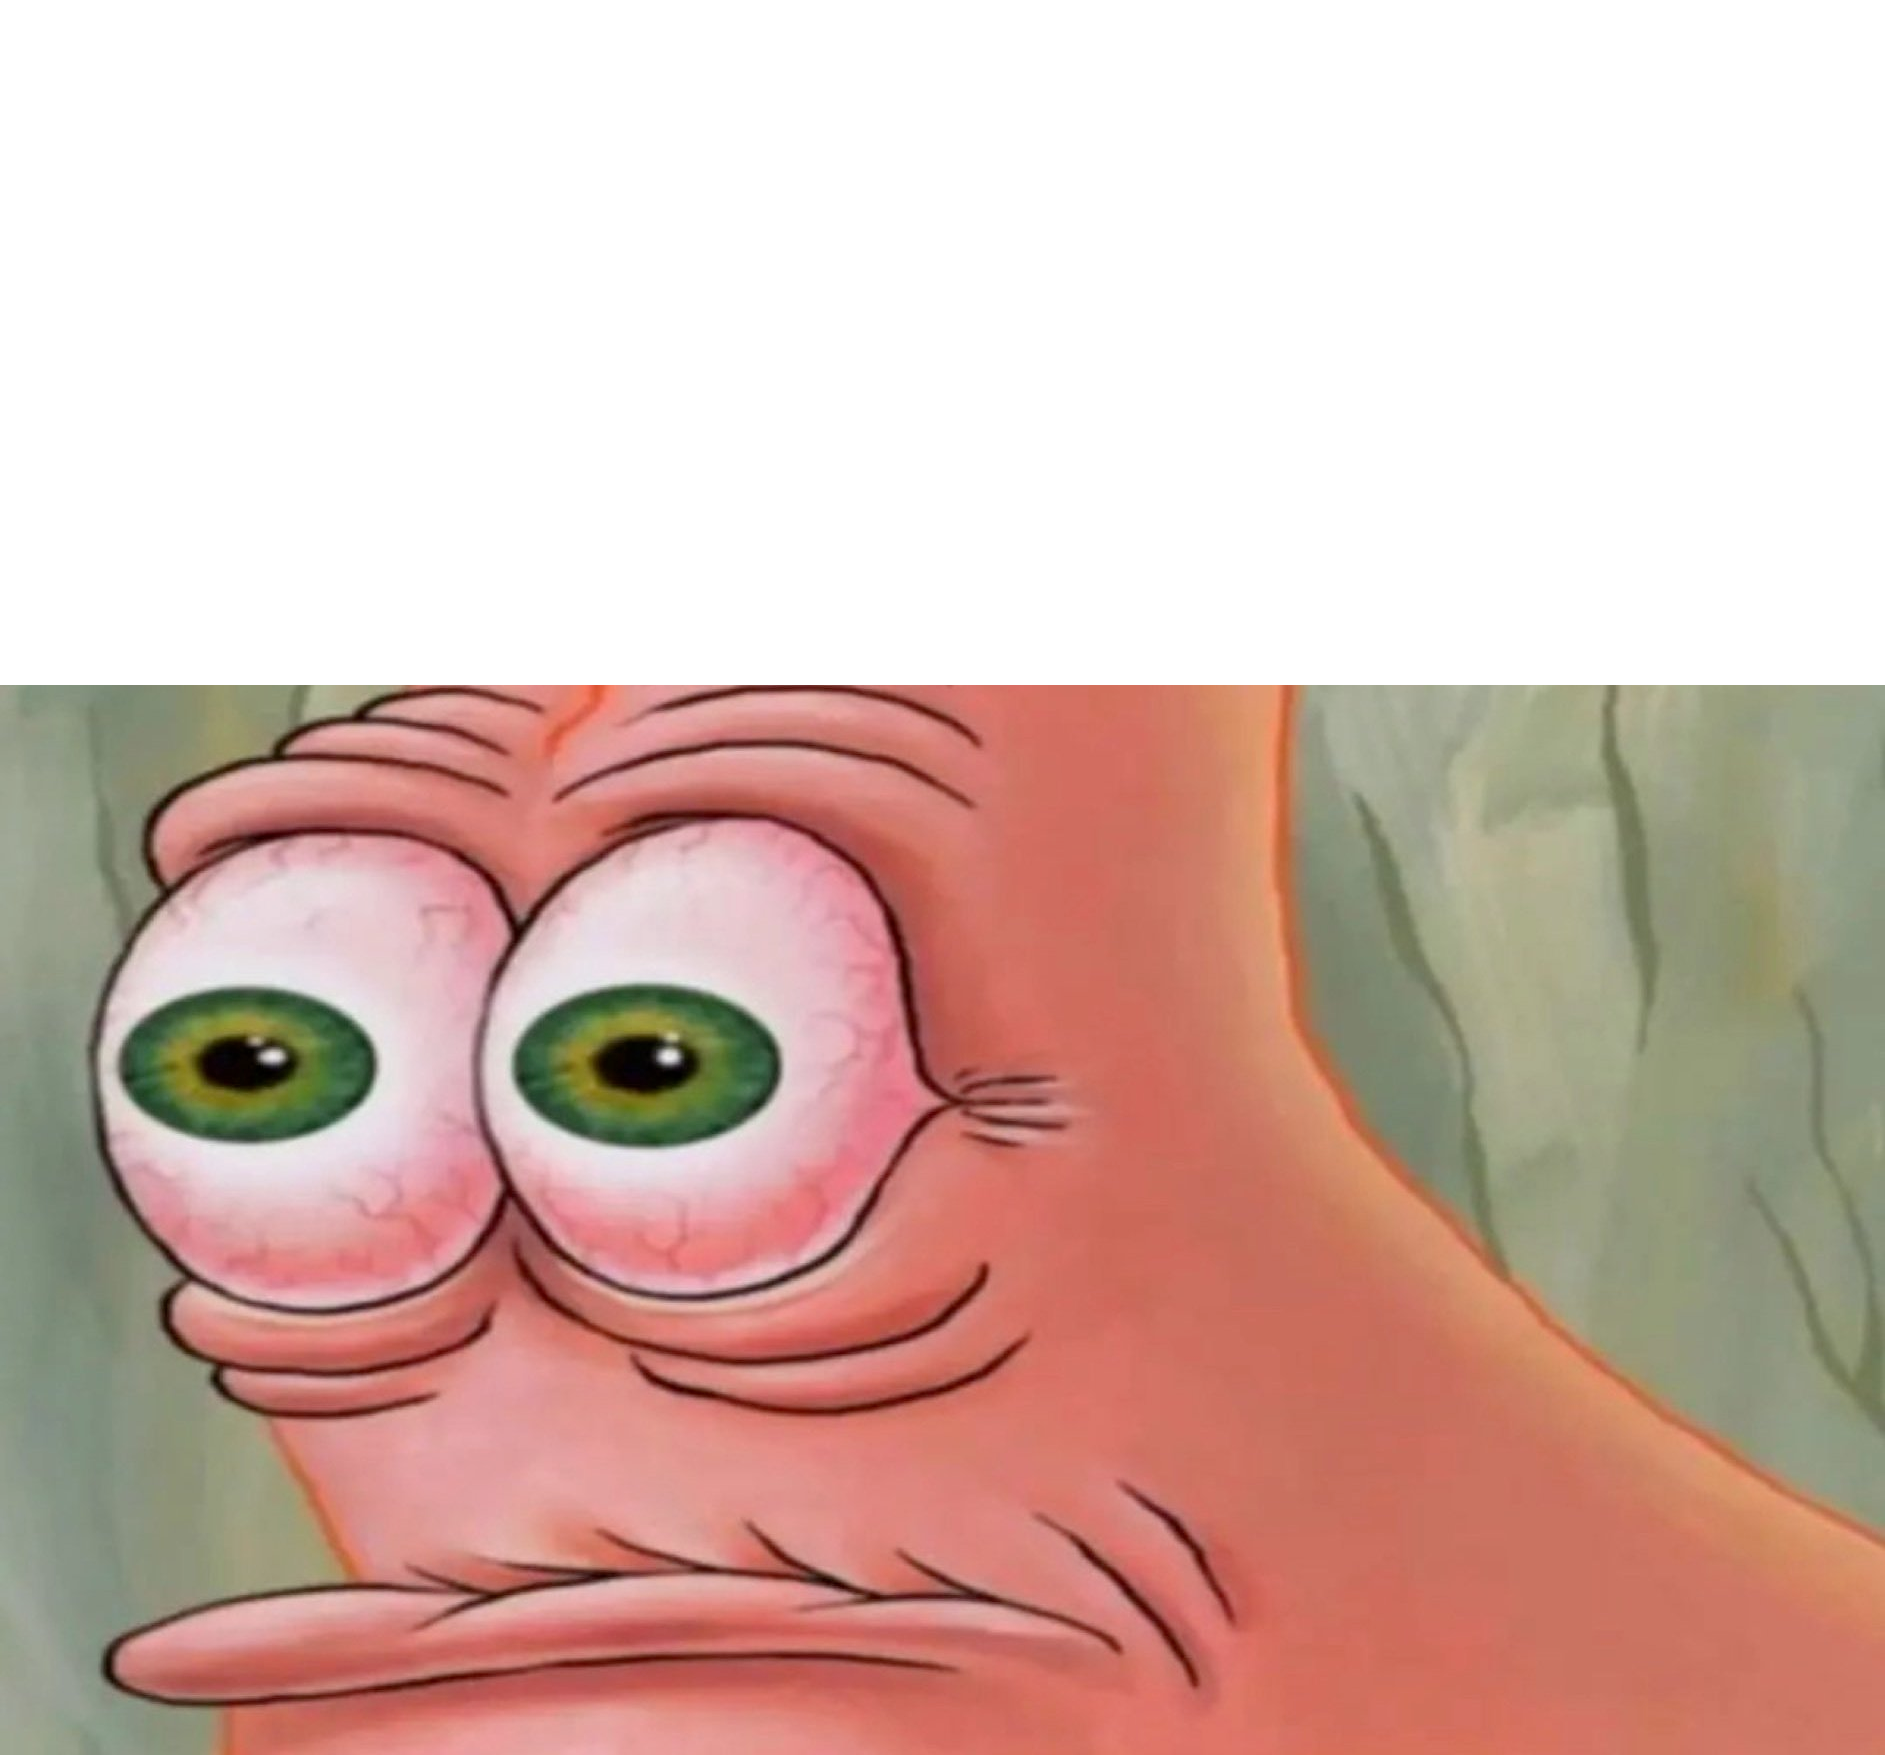 Patrick Staring Meme Meme Generator - Imgflip